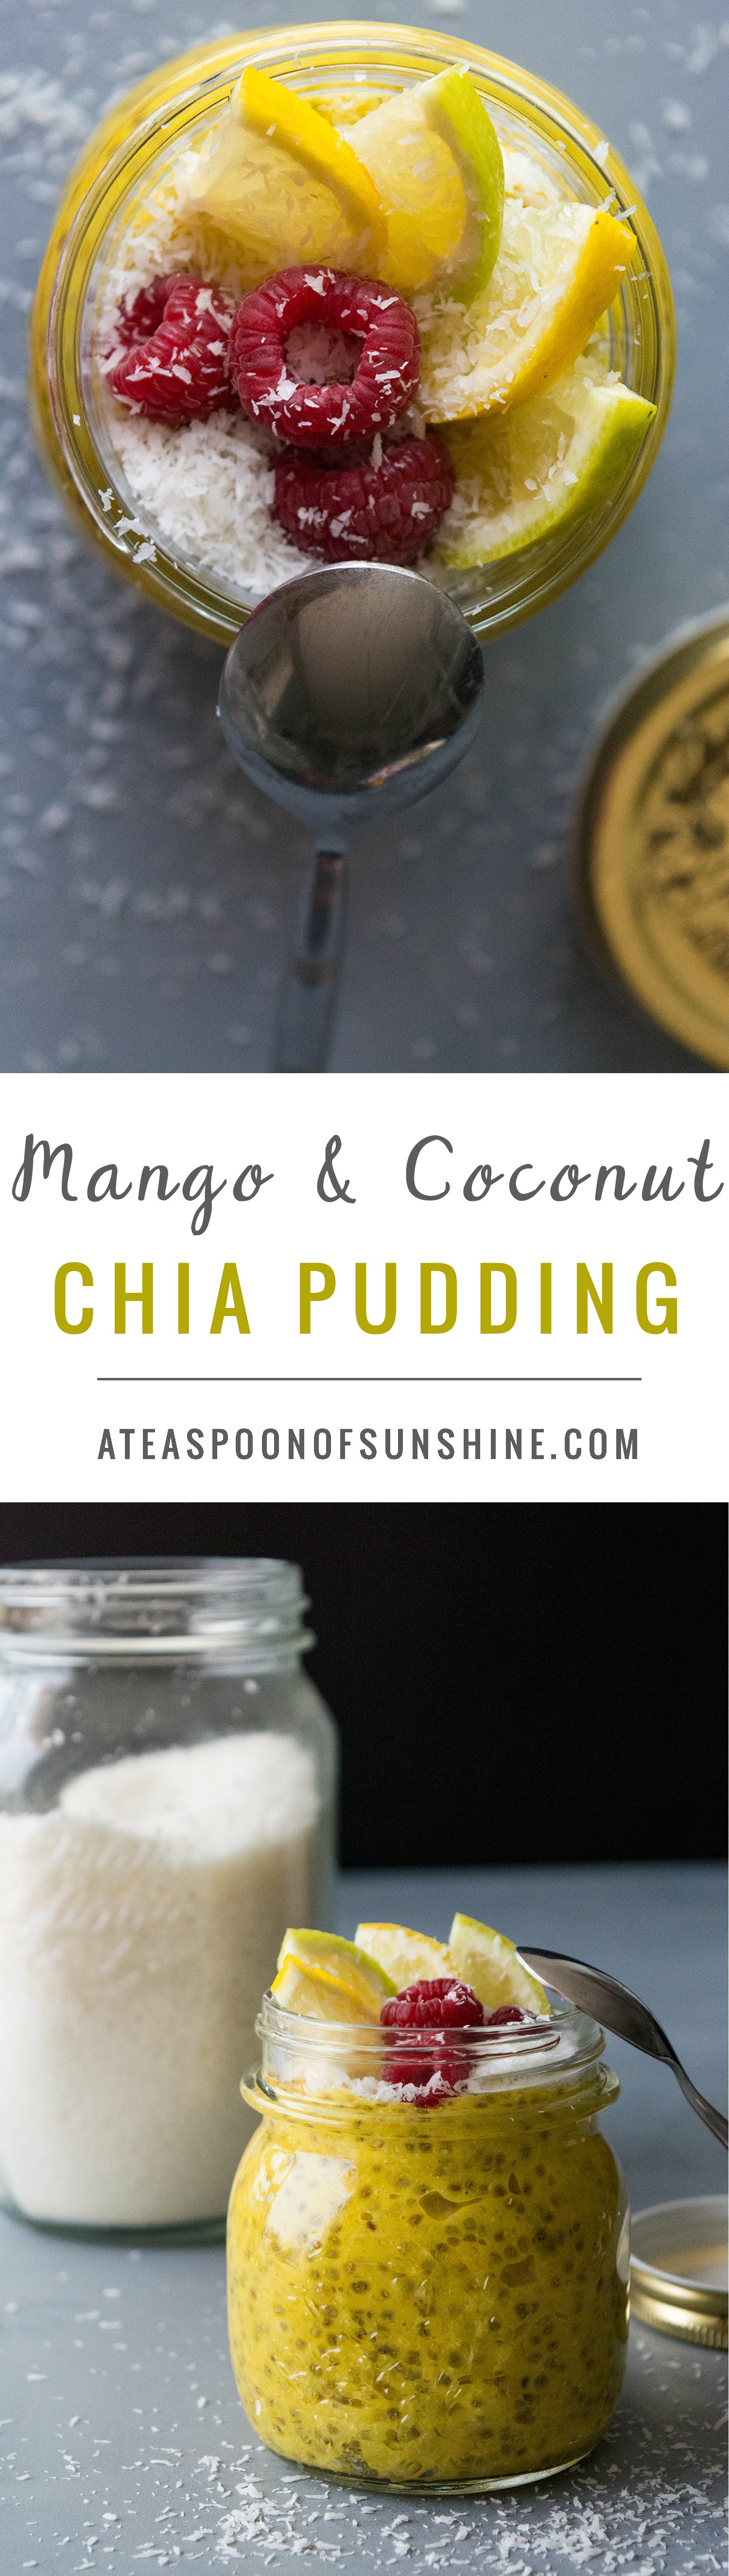 Mango & Coconut Chia Pudding